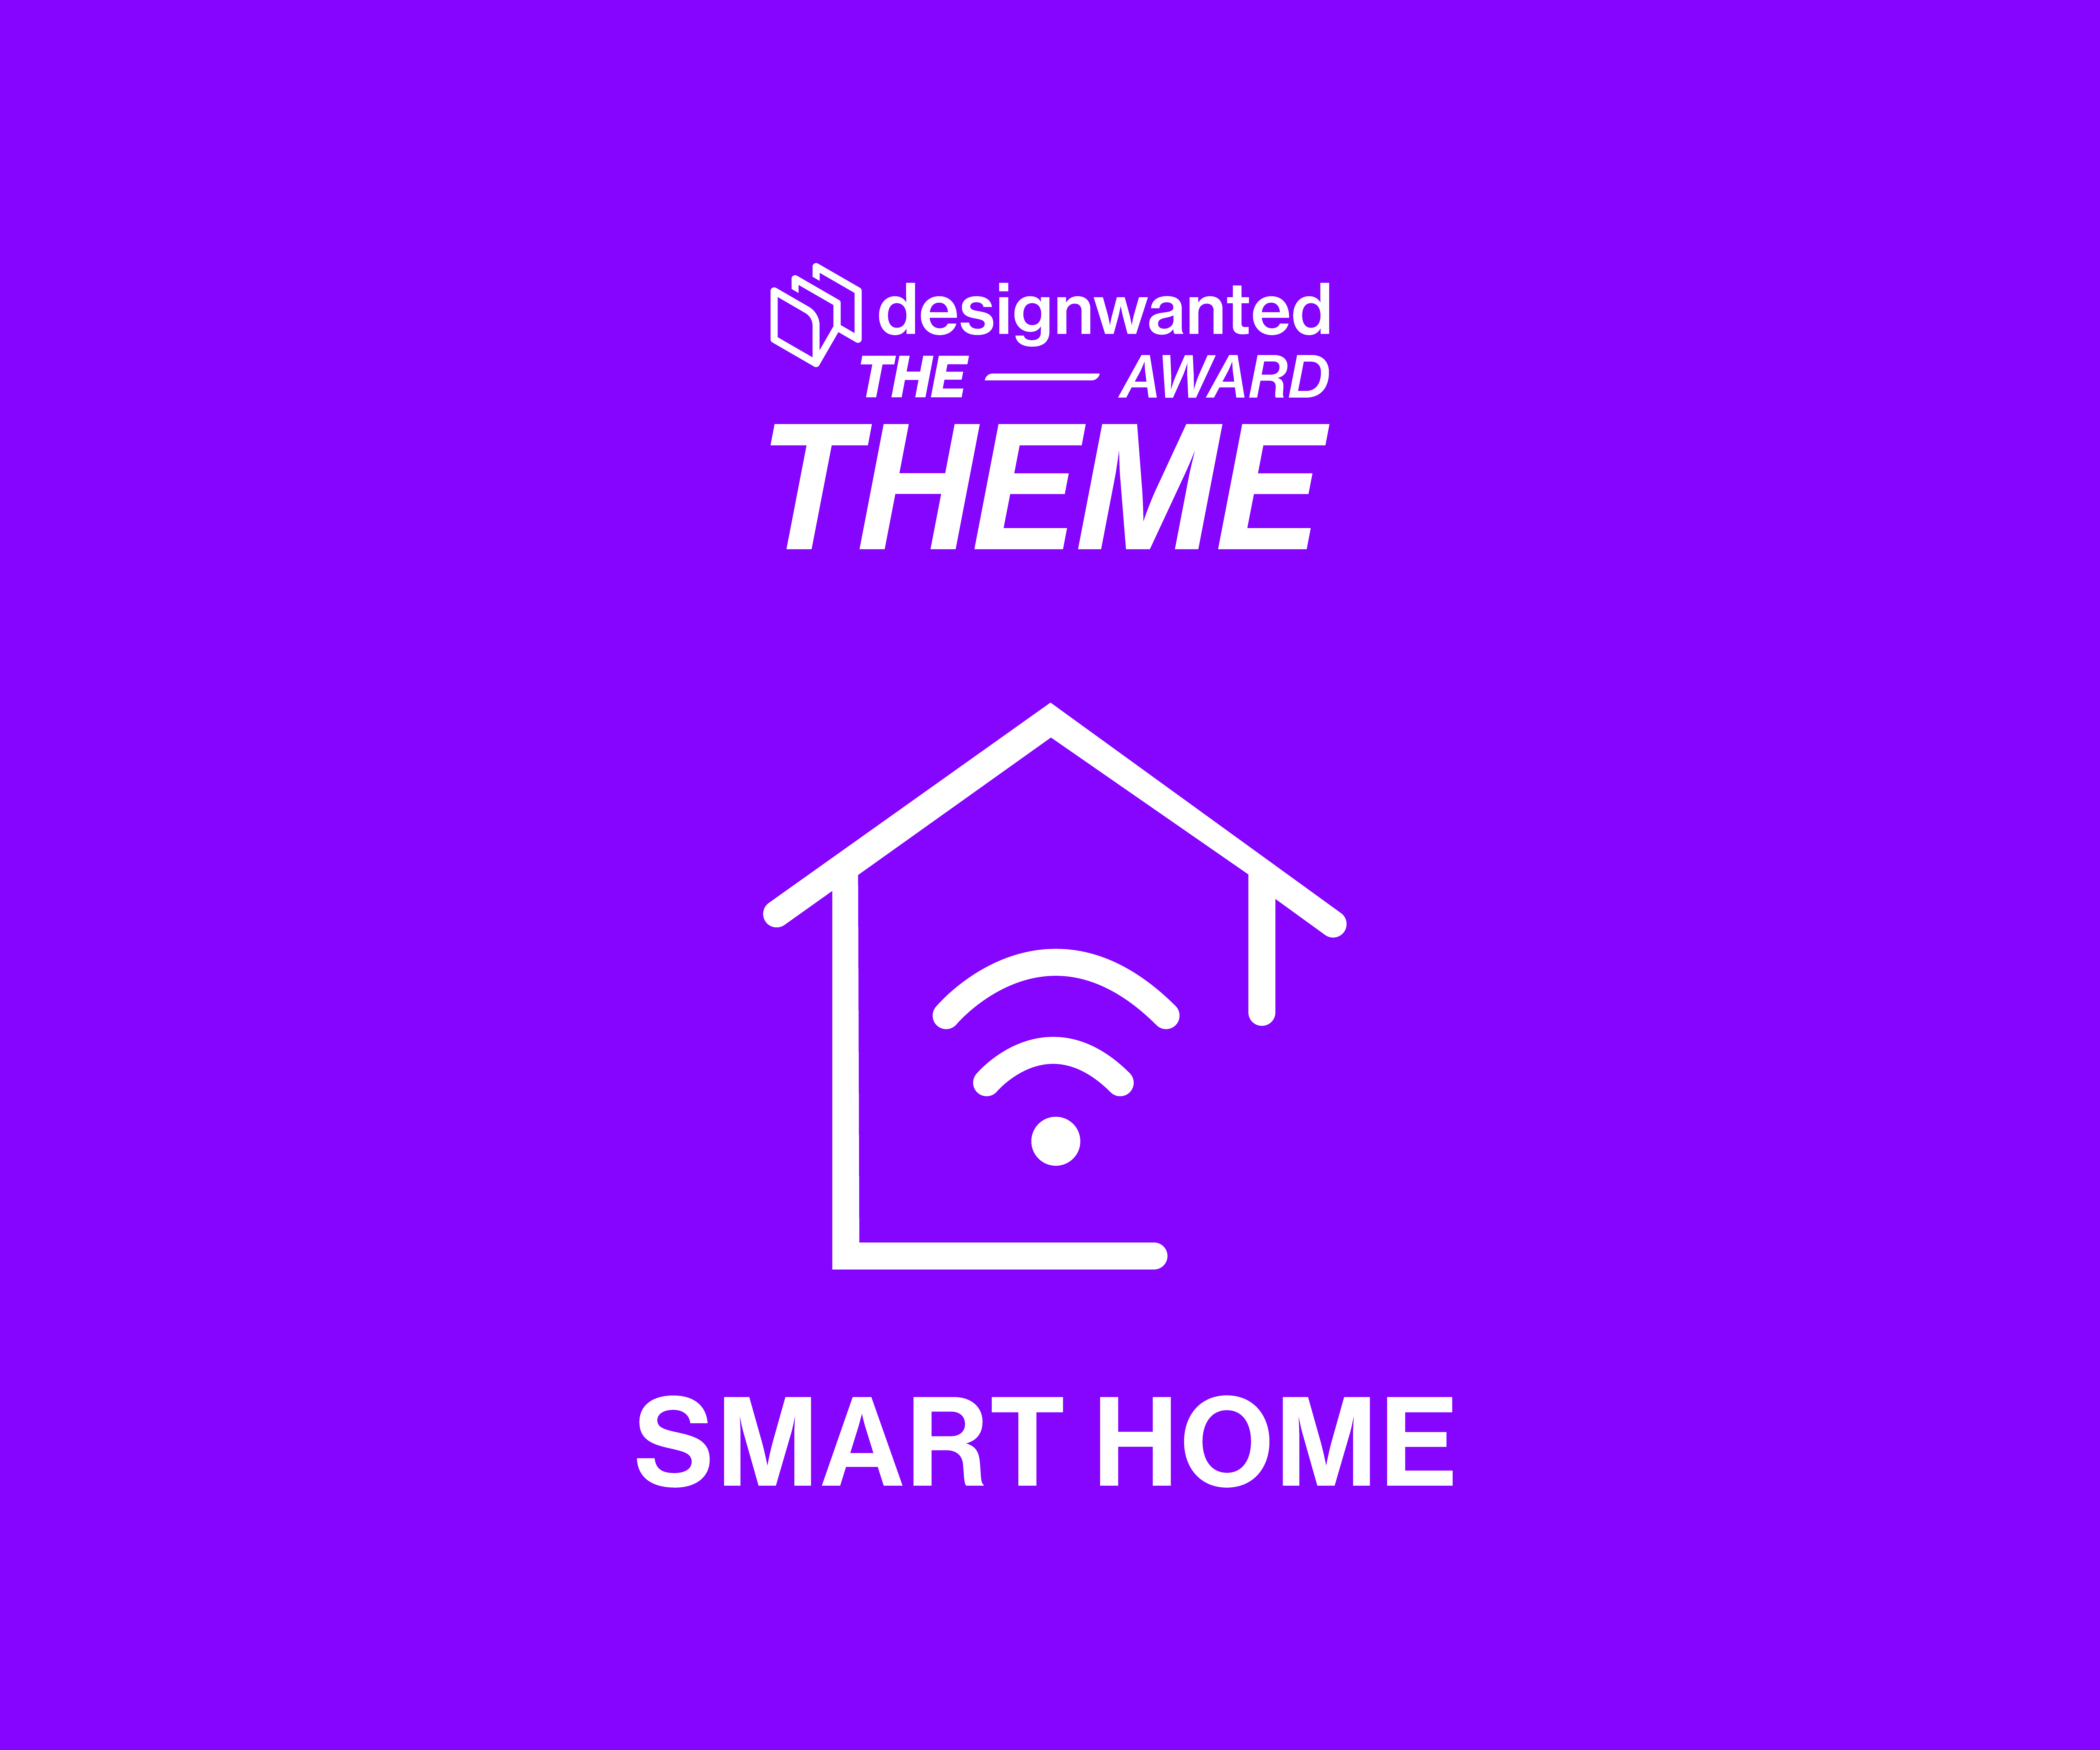 The theme: SMART HOME